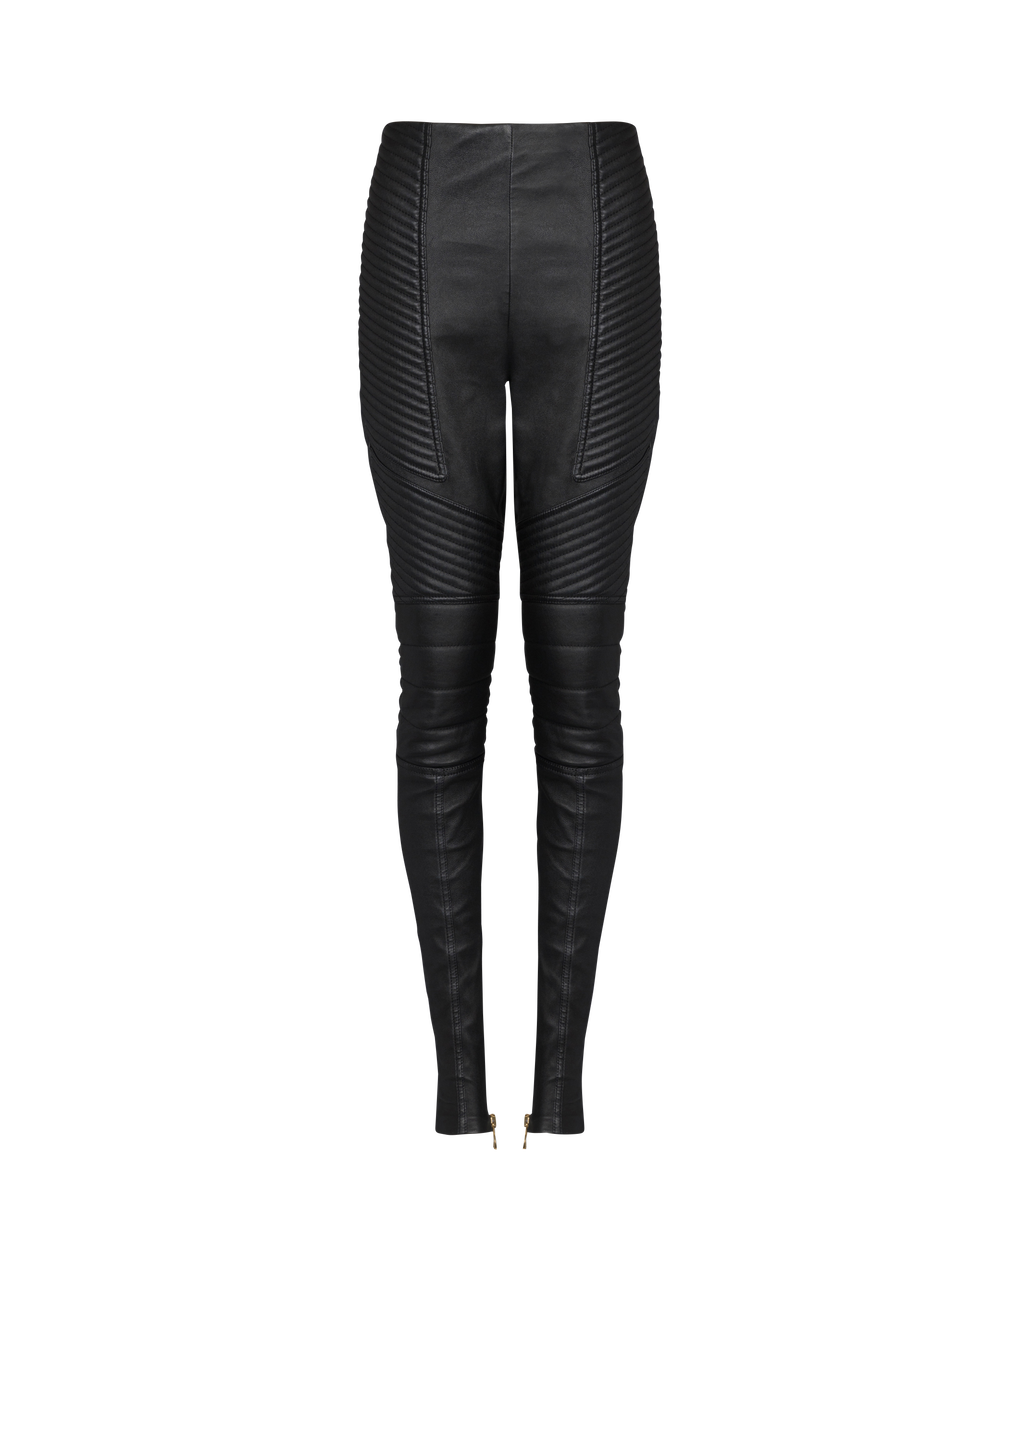 Slim-fit leather trousers, black, hi-res